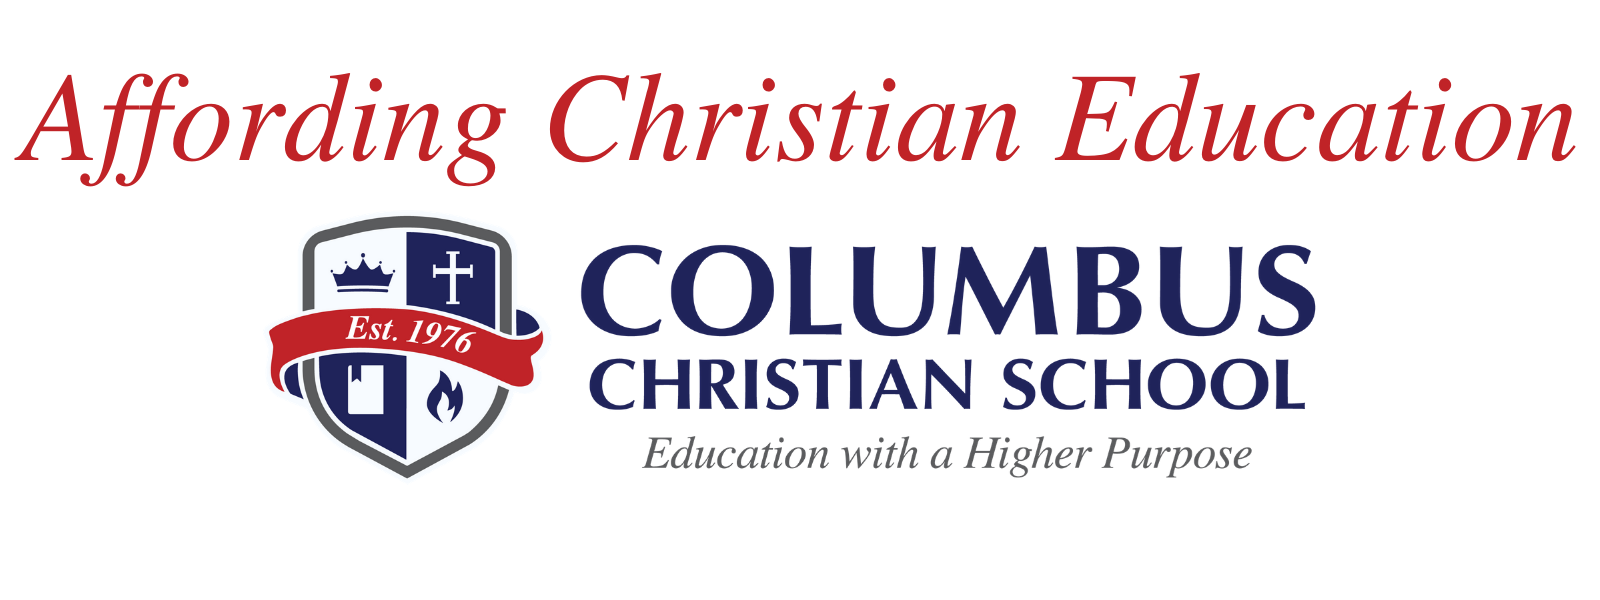 affording christian education